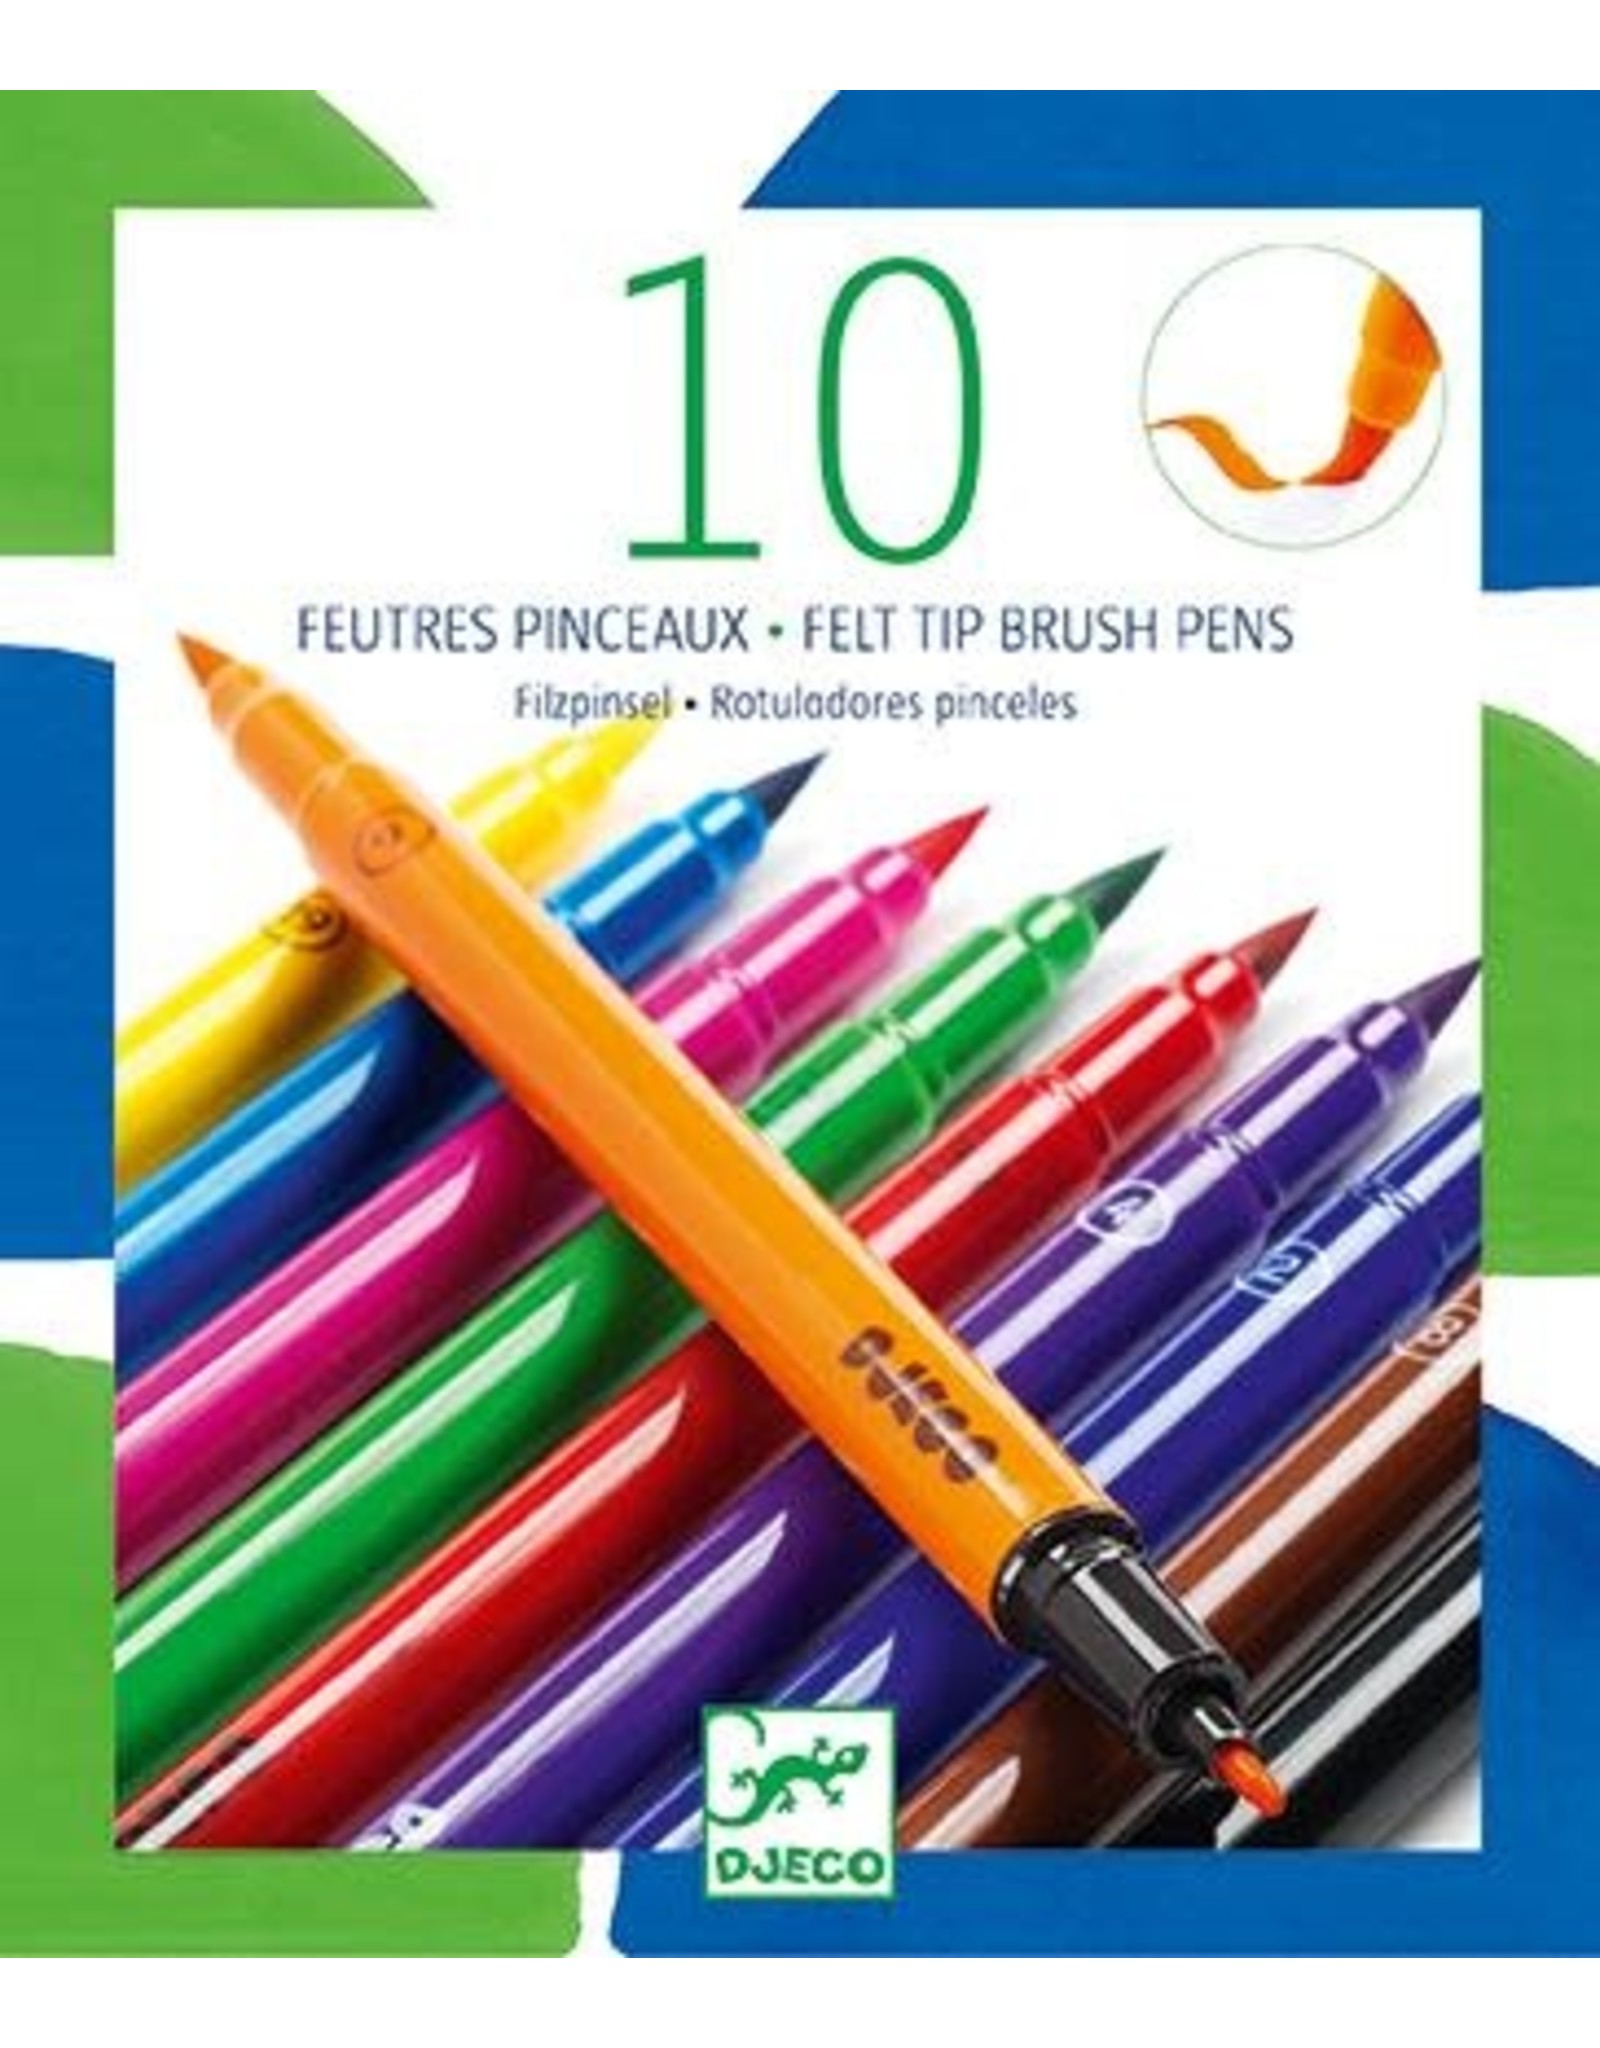 Djeco 10 Felt Tip Brush Pens